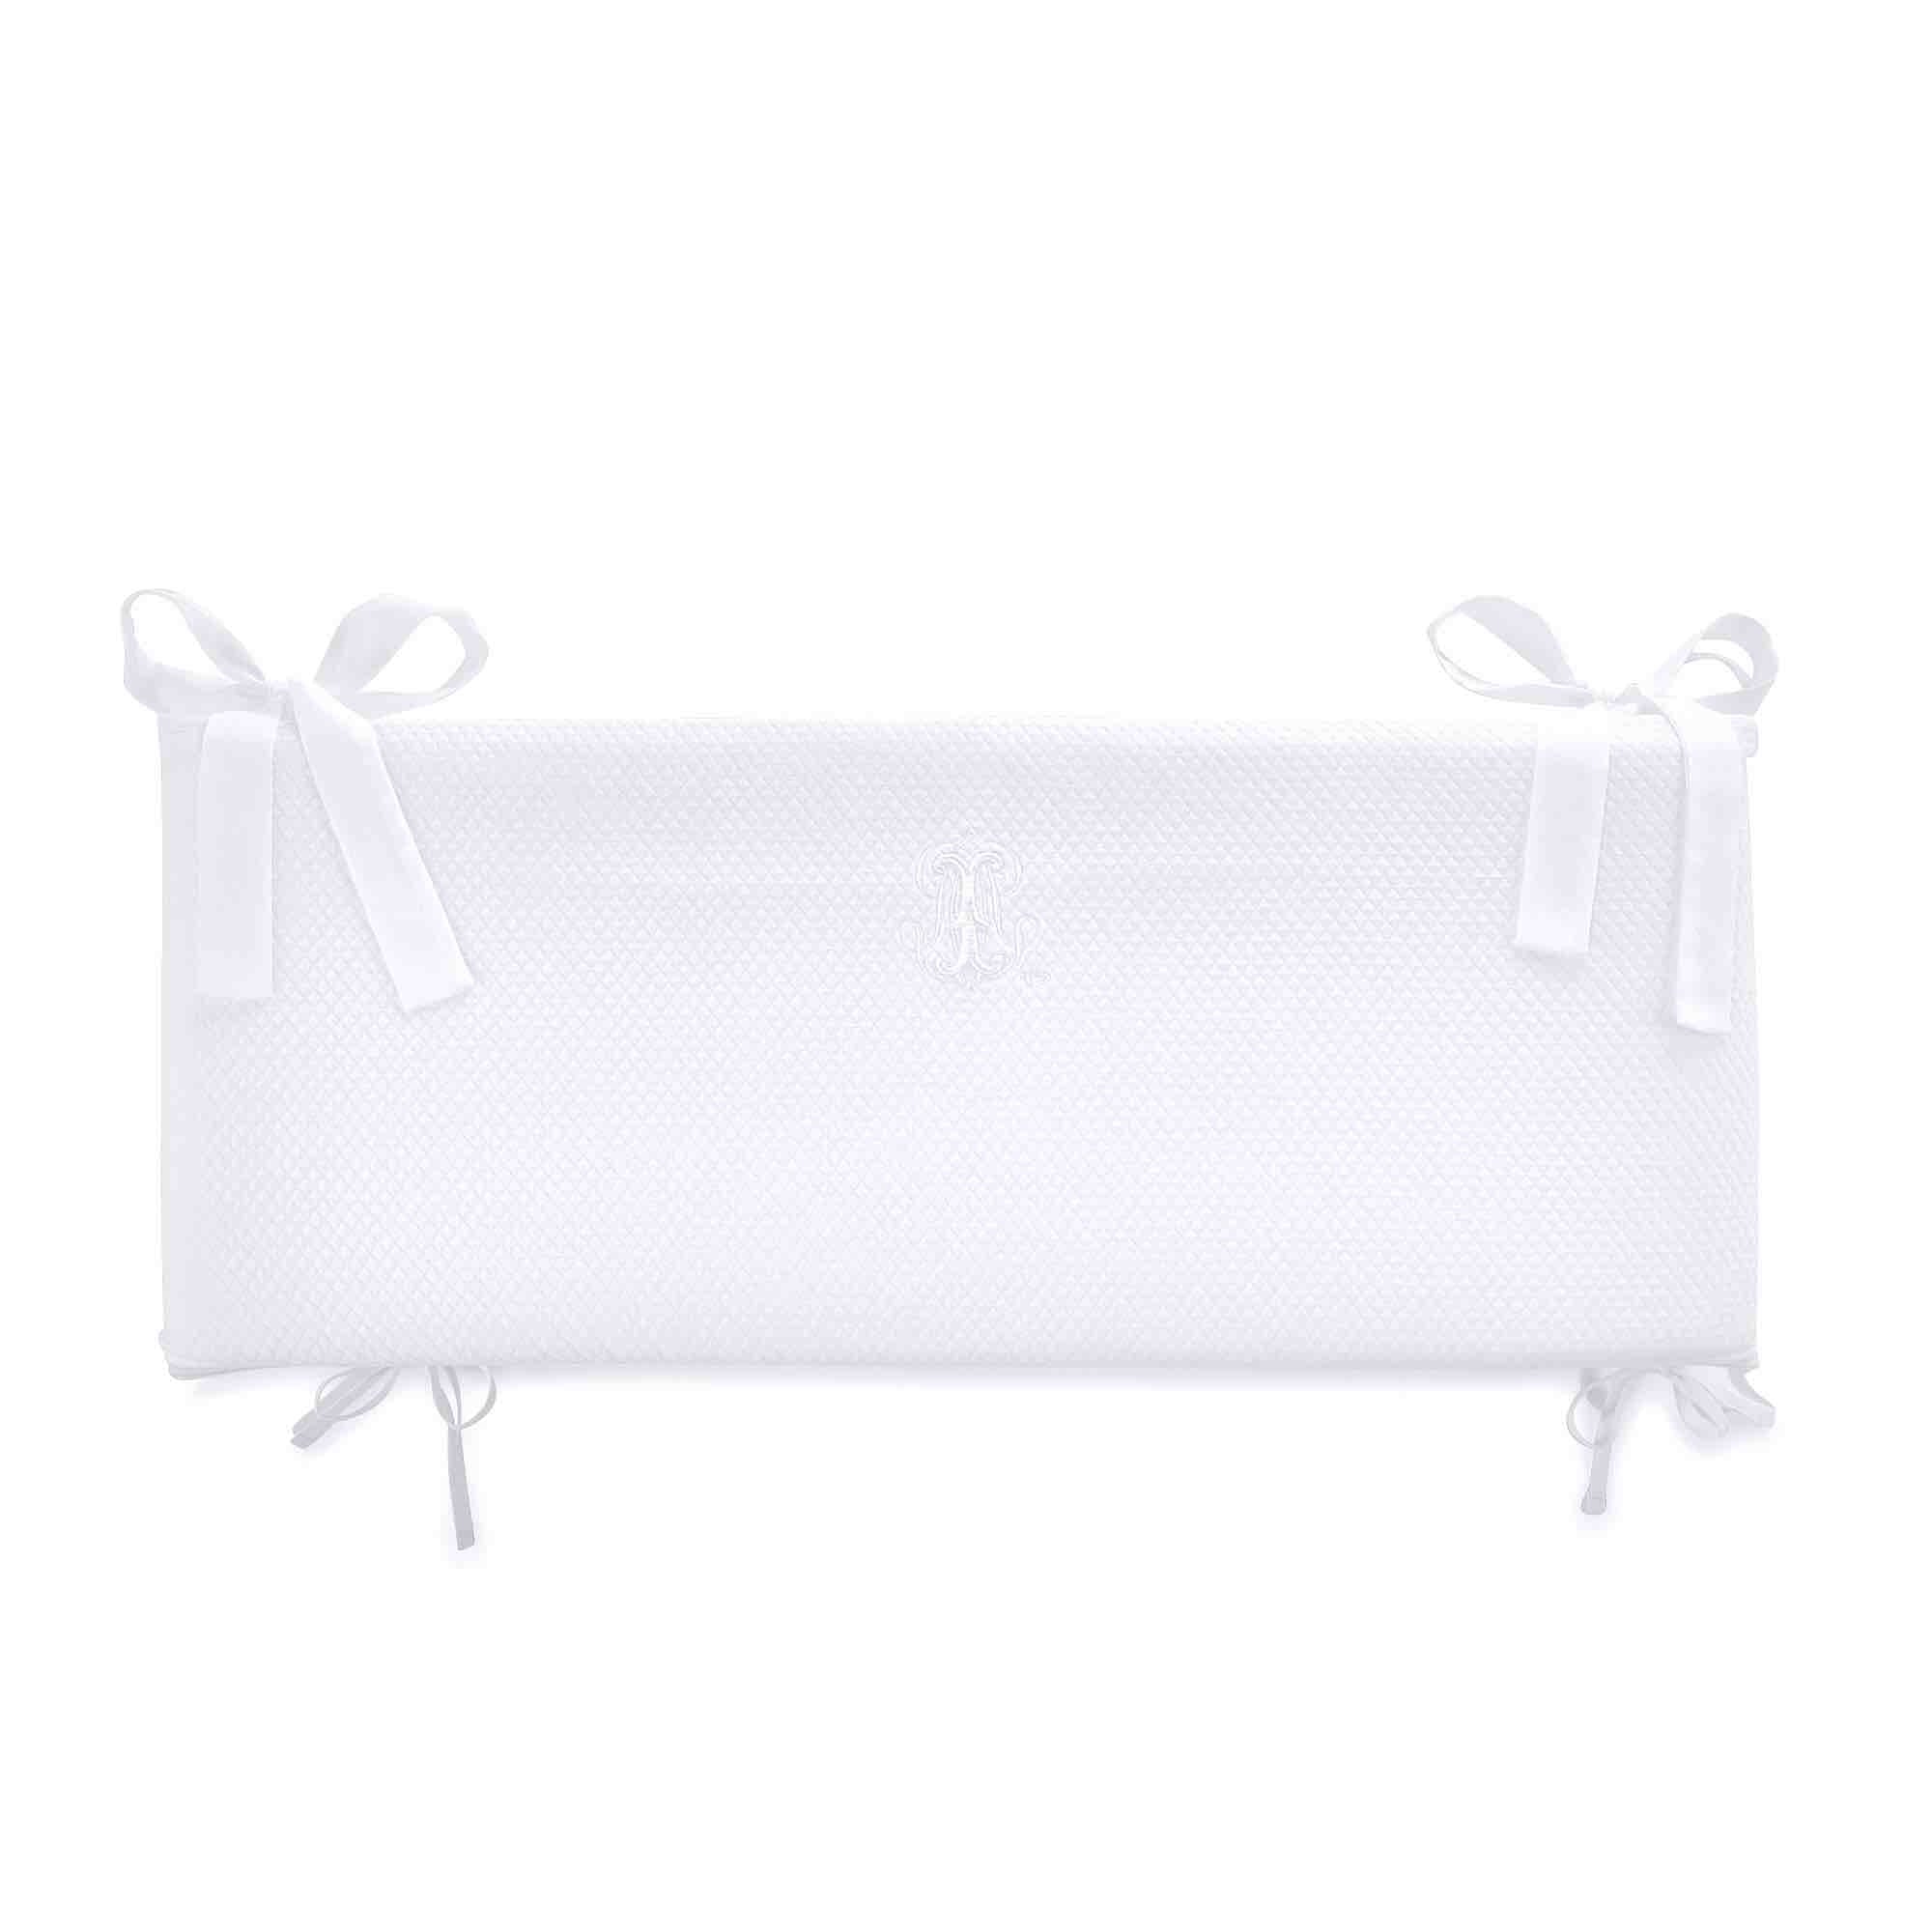 Theophile & Patachou Cot Bed Bumper 60cm - Royal White